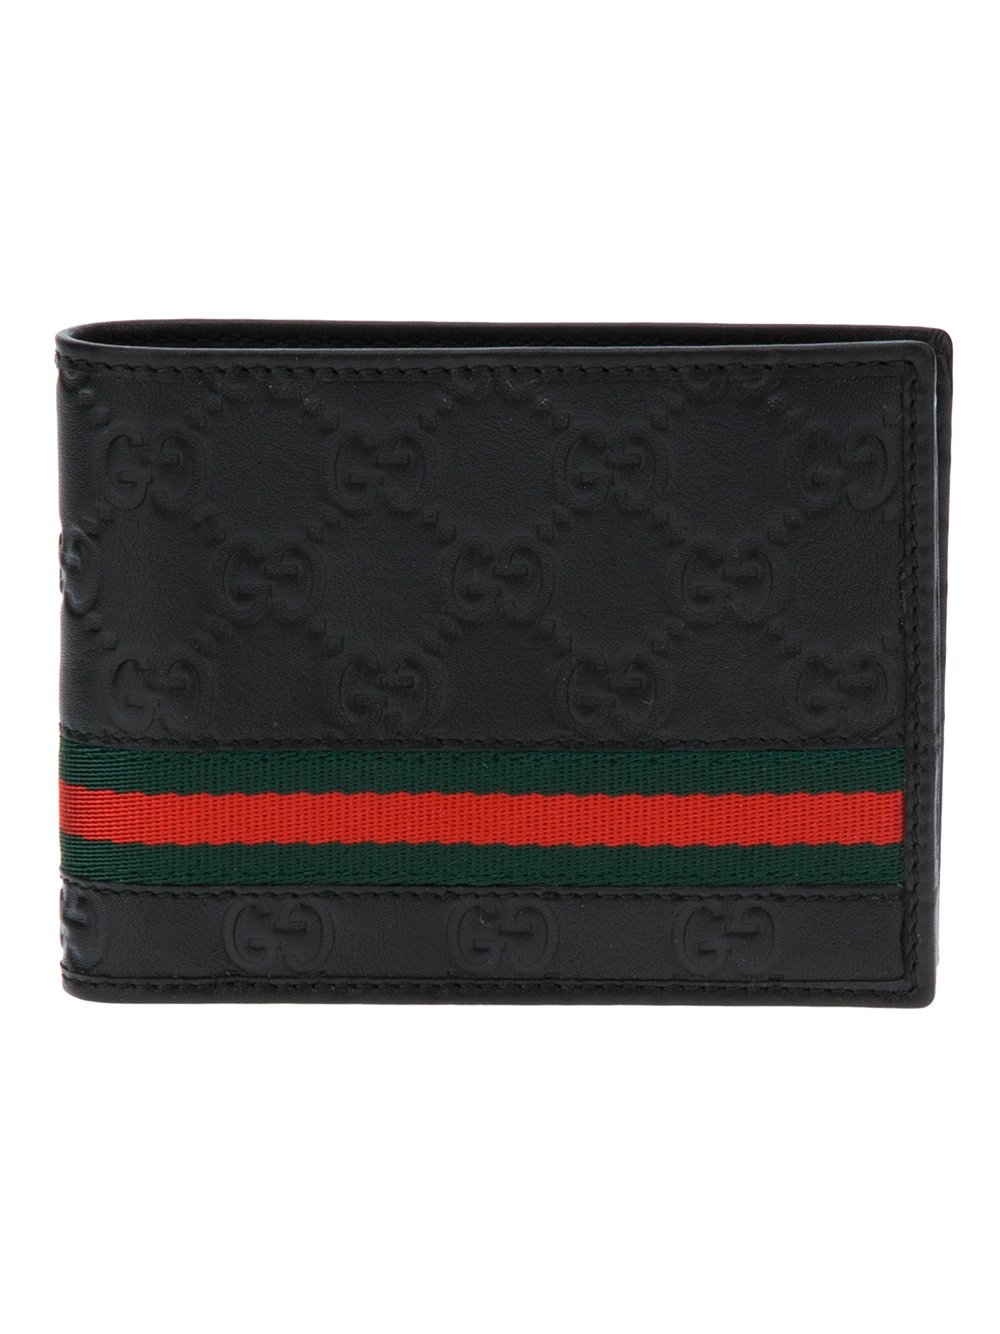 Gucci Brand Embossed Wallet in Black for Men | Lyst